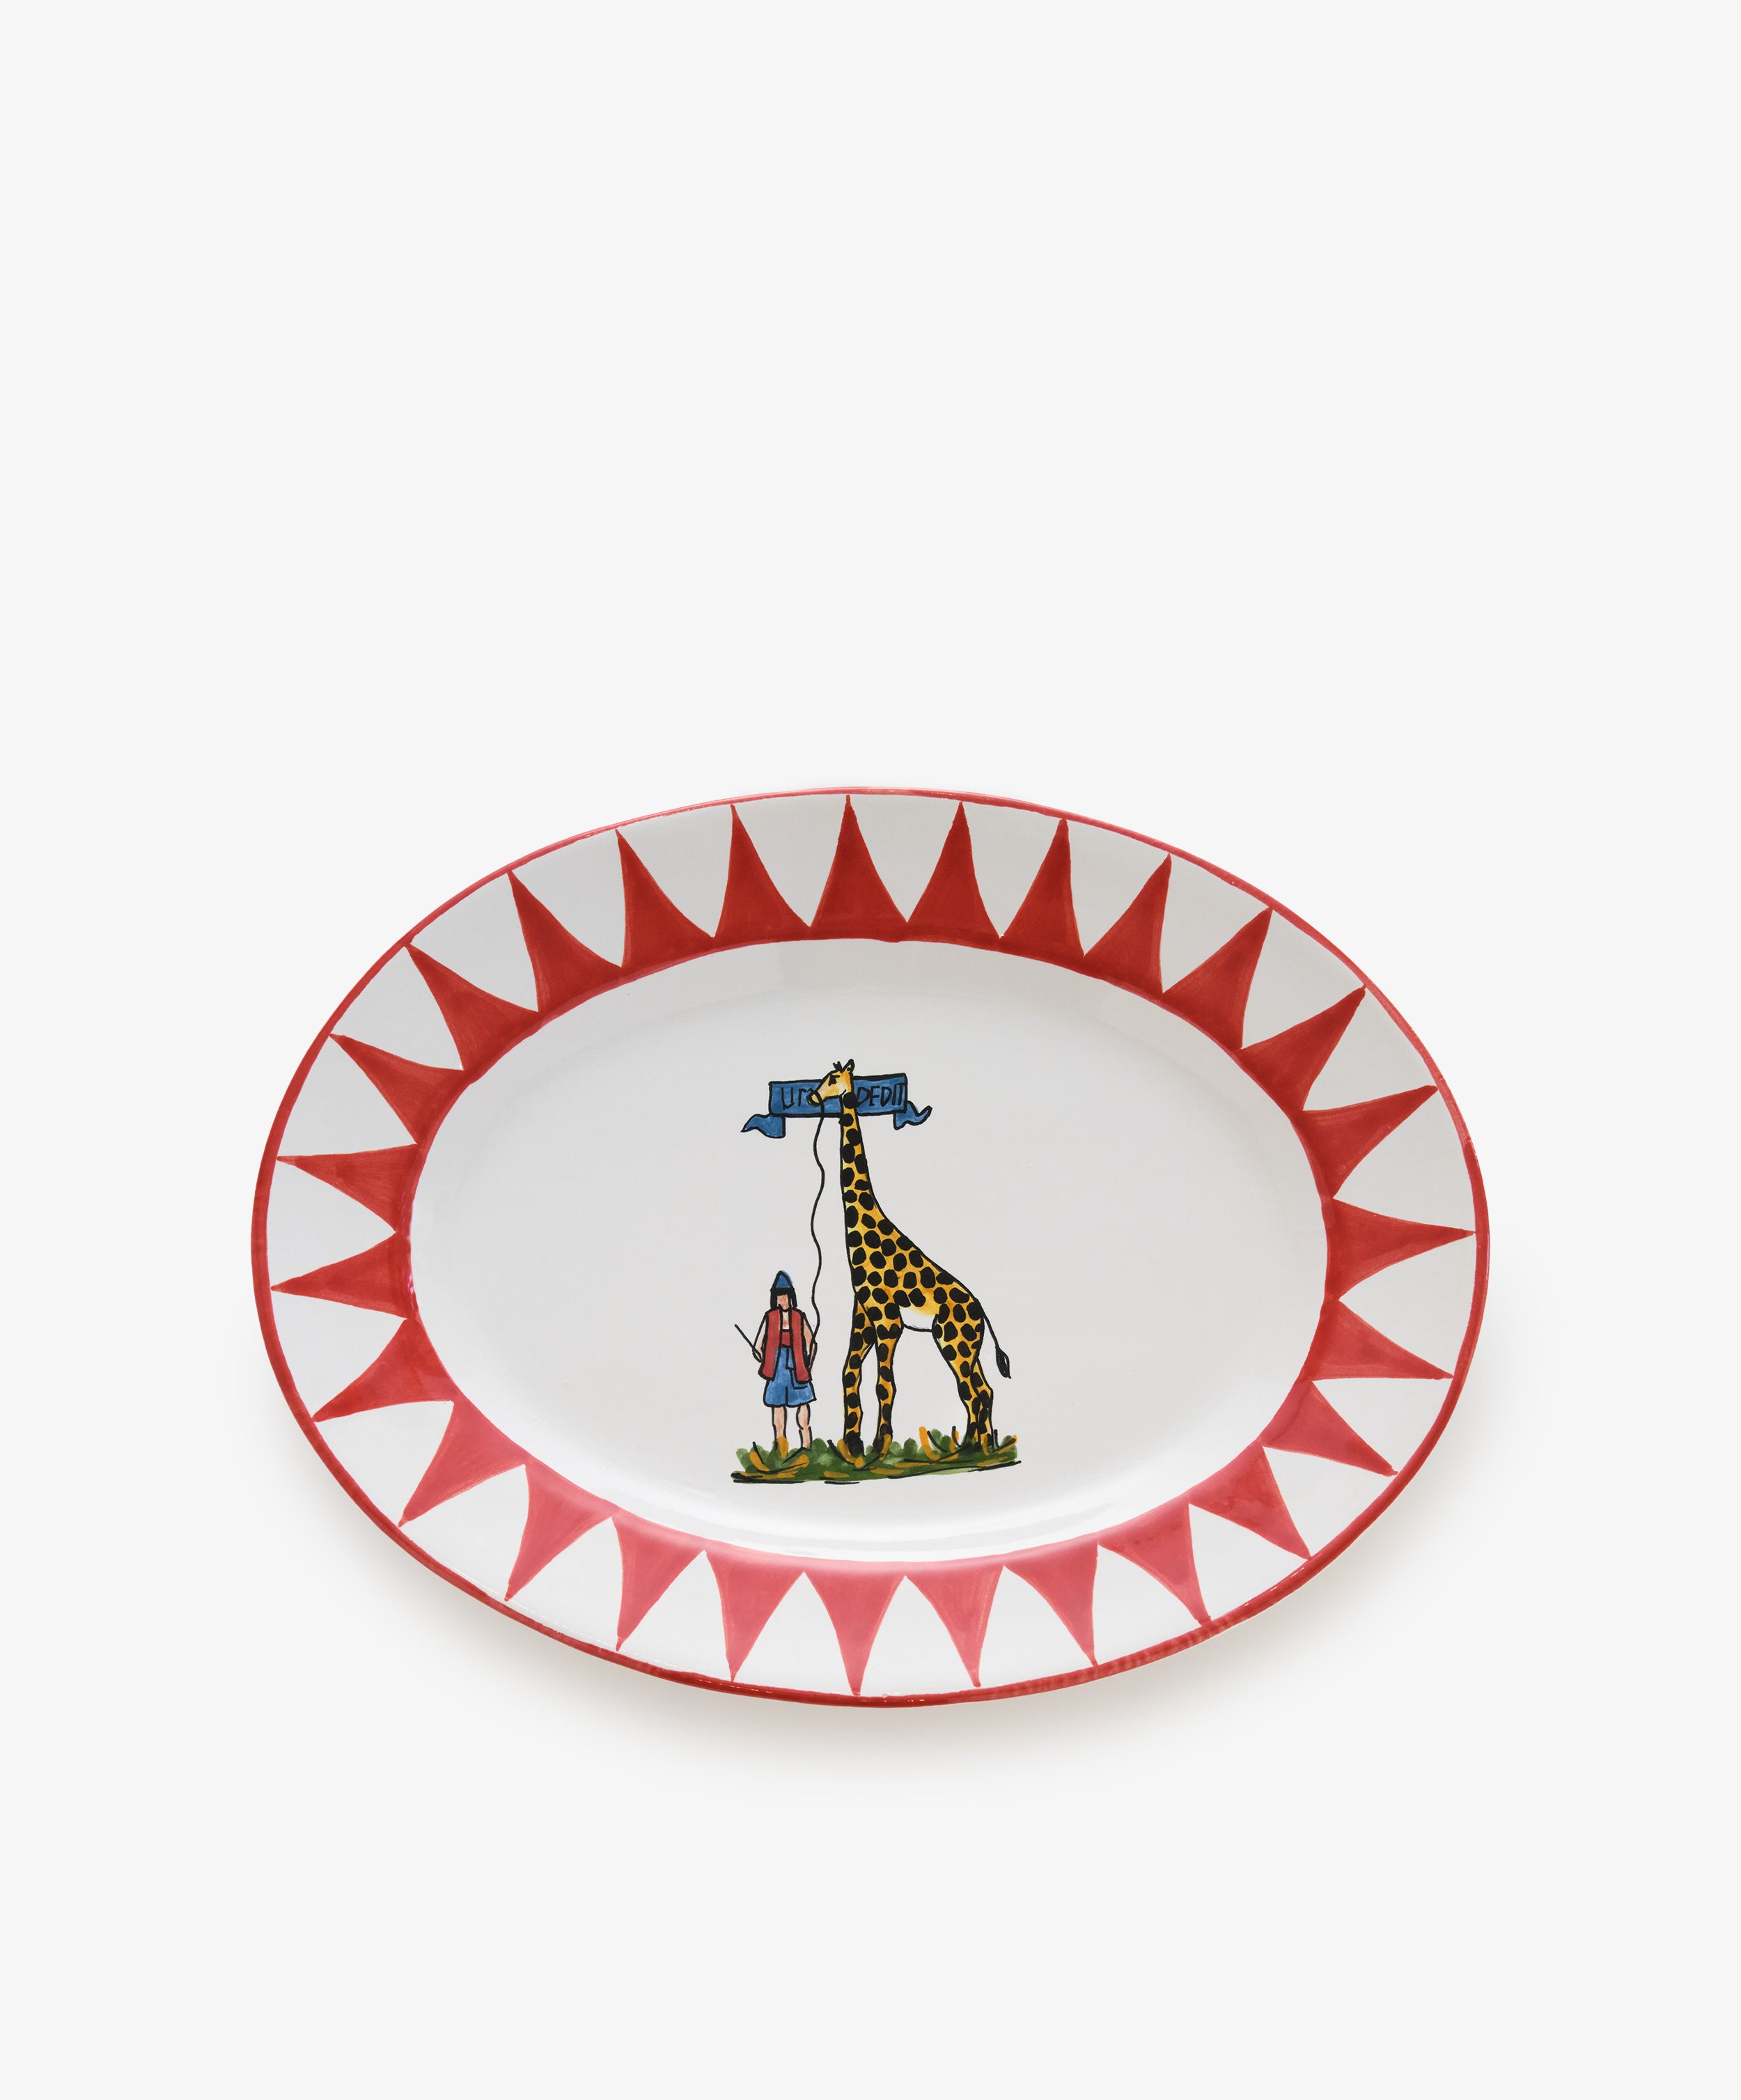 Palio Oval Serving Platter, The Giraffe